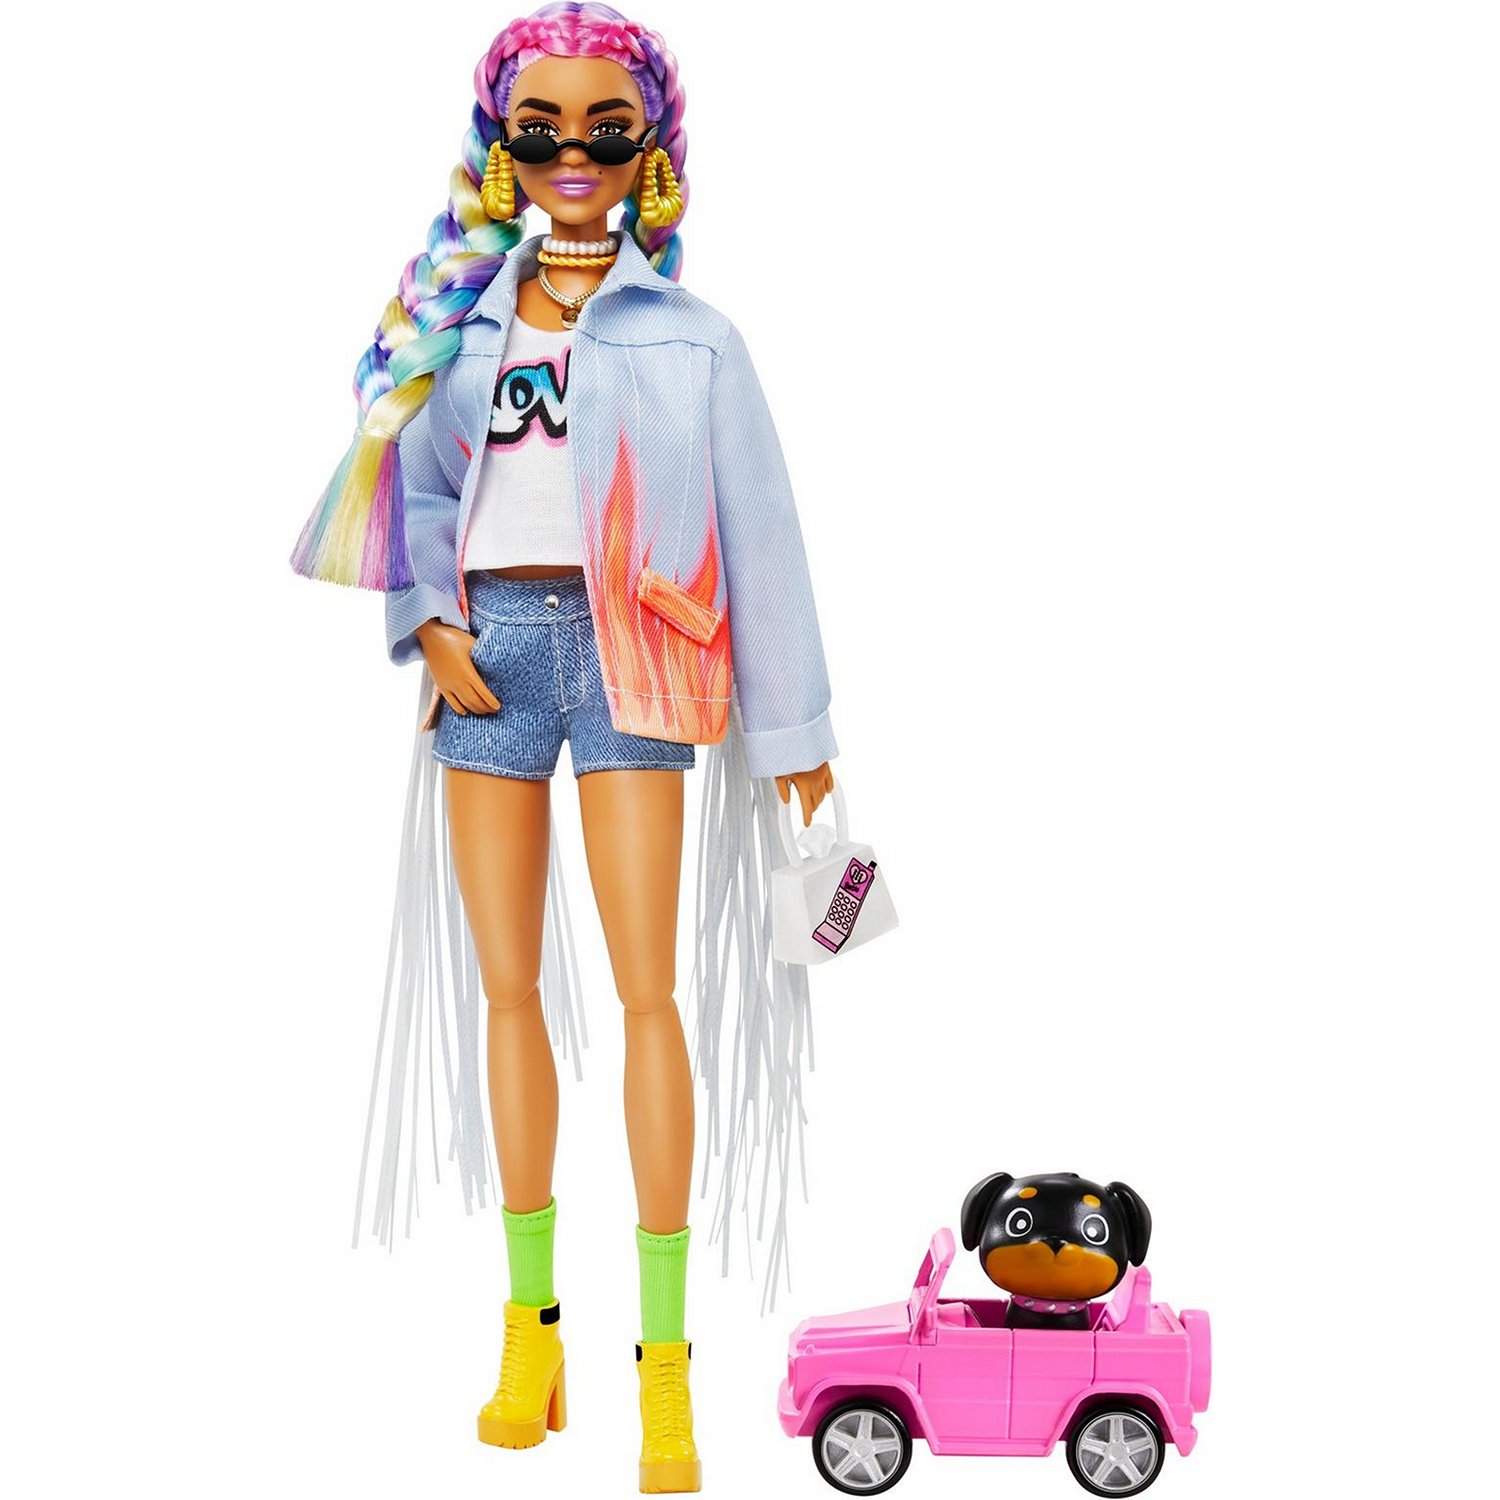 Кукла Barbie Экстра, с радужными косичками GRN29